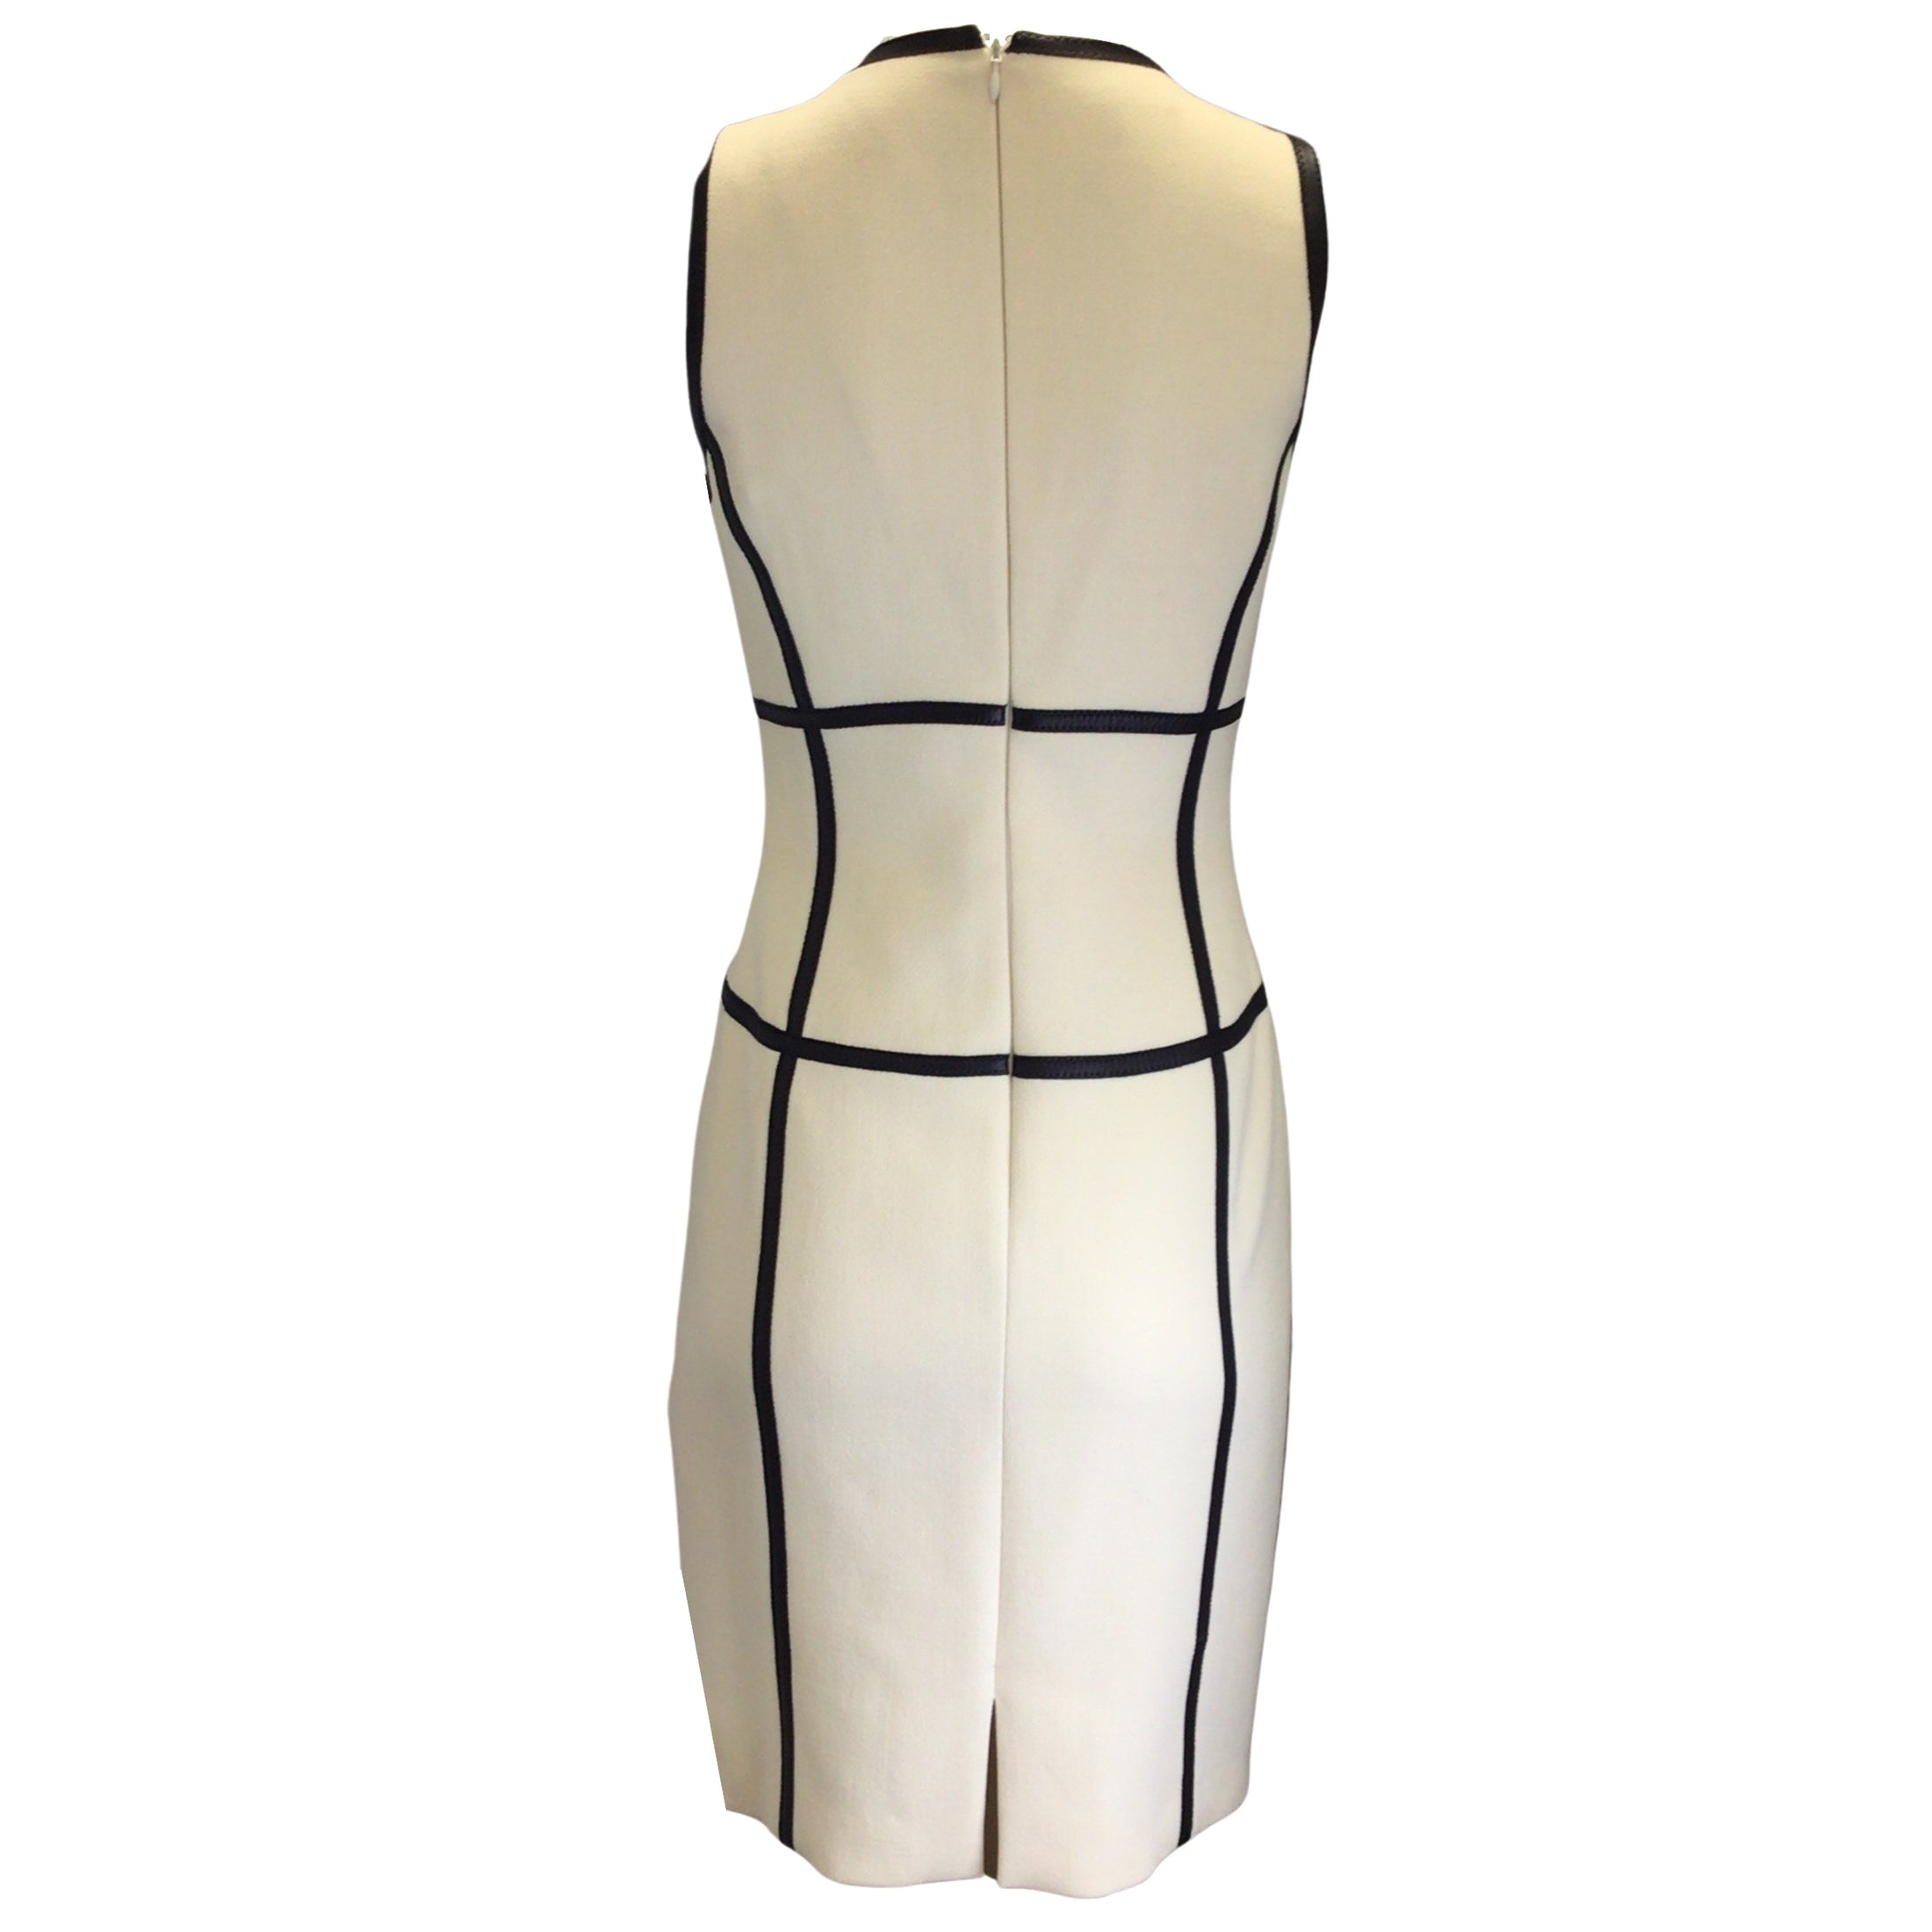 Michael Kors Ivory / Black Leather Trimmed Sleeveless Wool Crepe Dress